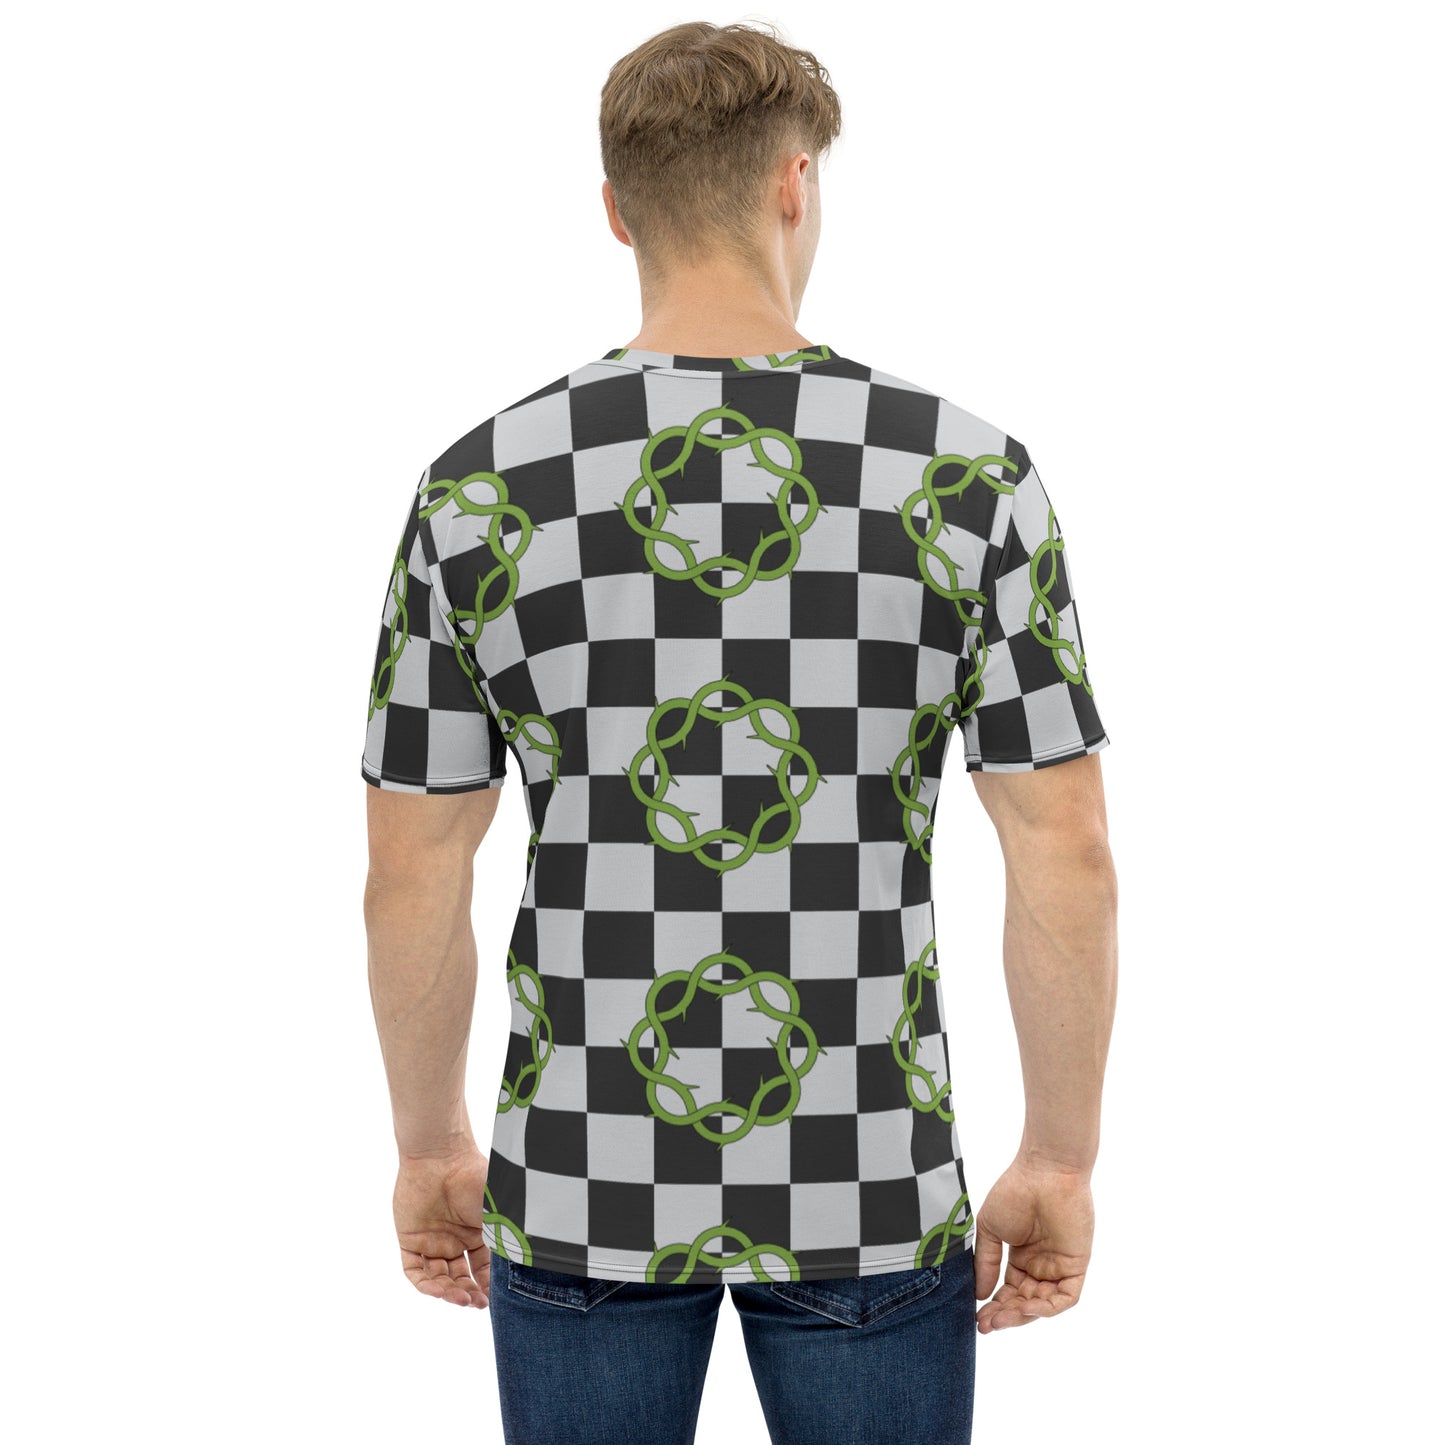 Toarnen Gamer Moment Checked Pattern - Men's T-shirt